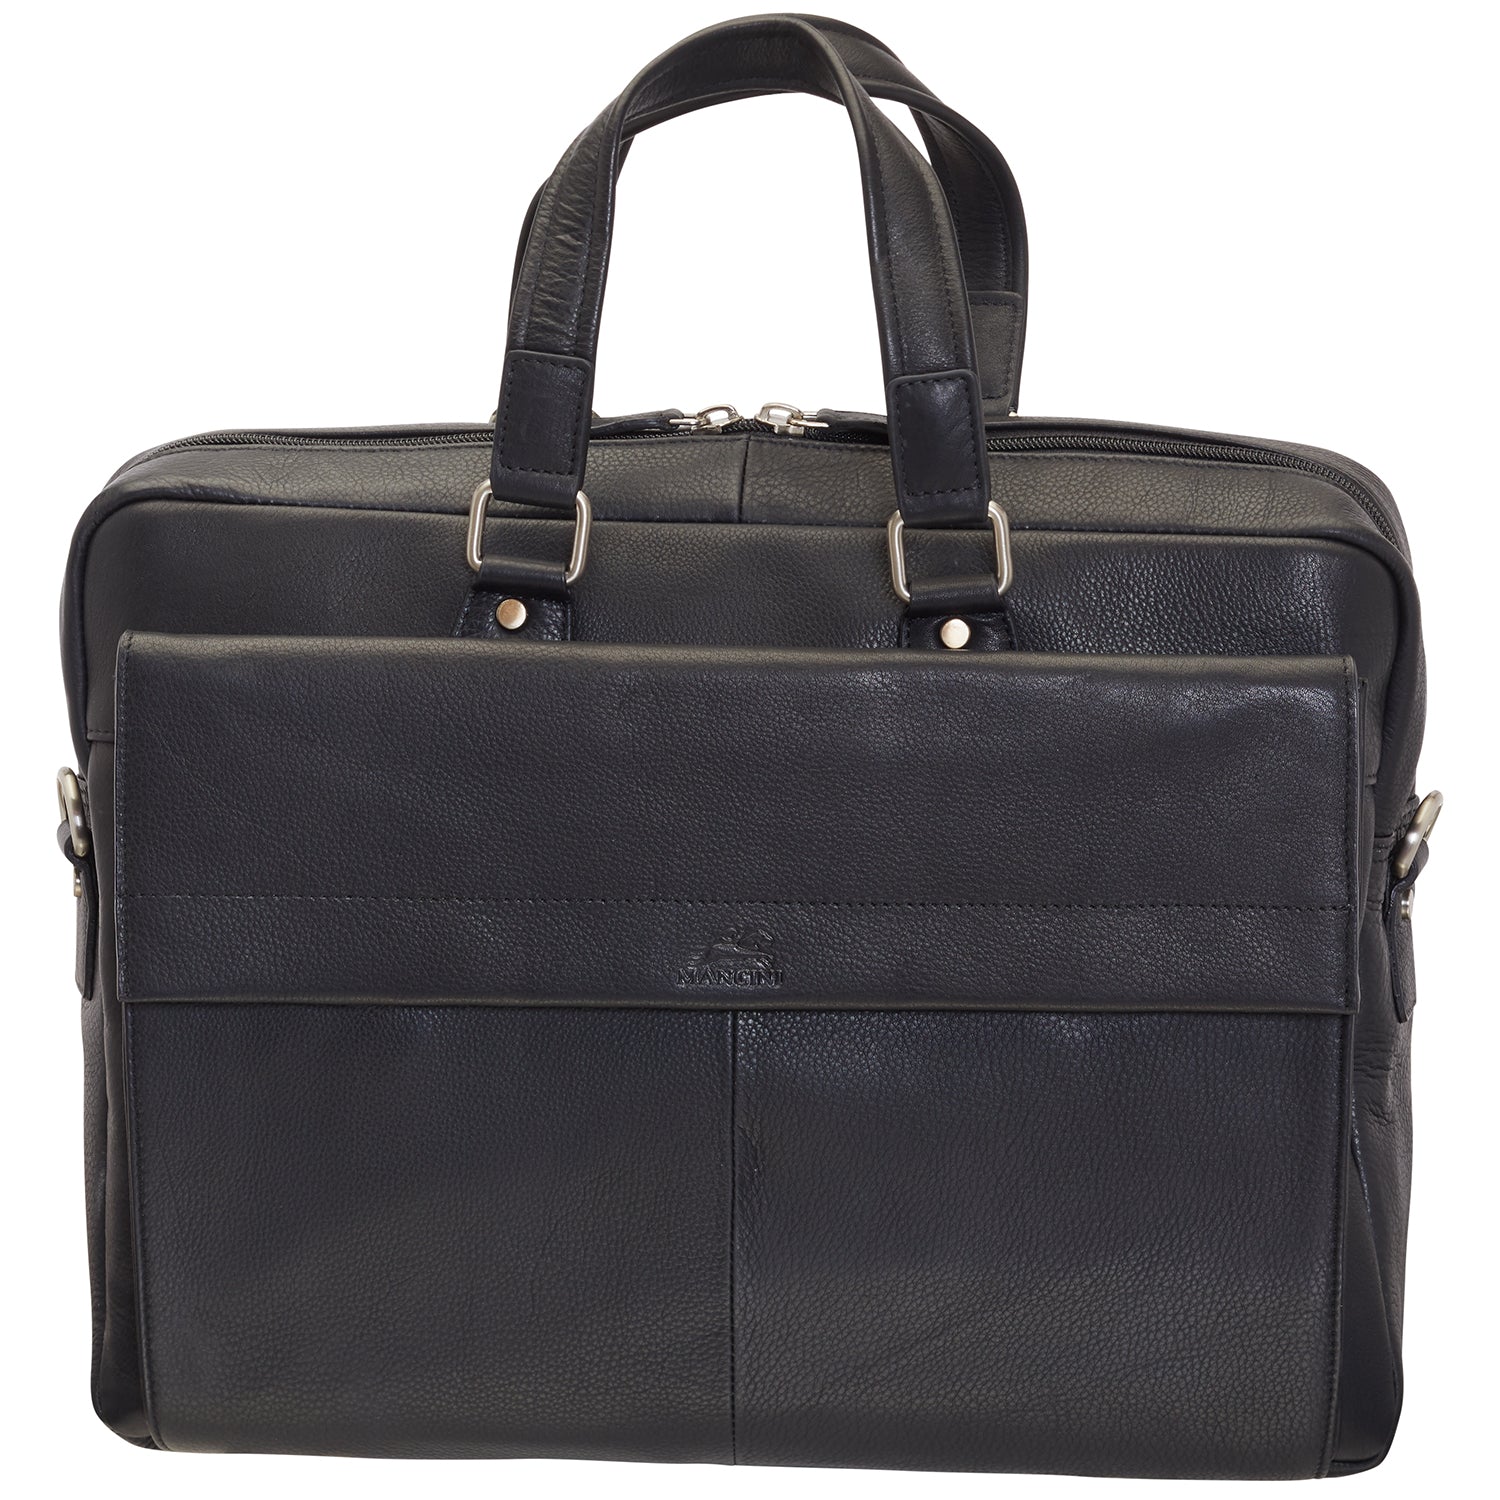 Mancini Leather Slim Laptop/tablet Briefcase, 16.25" x 2.5" x 12", Black